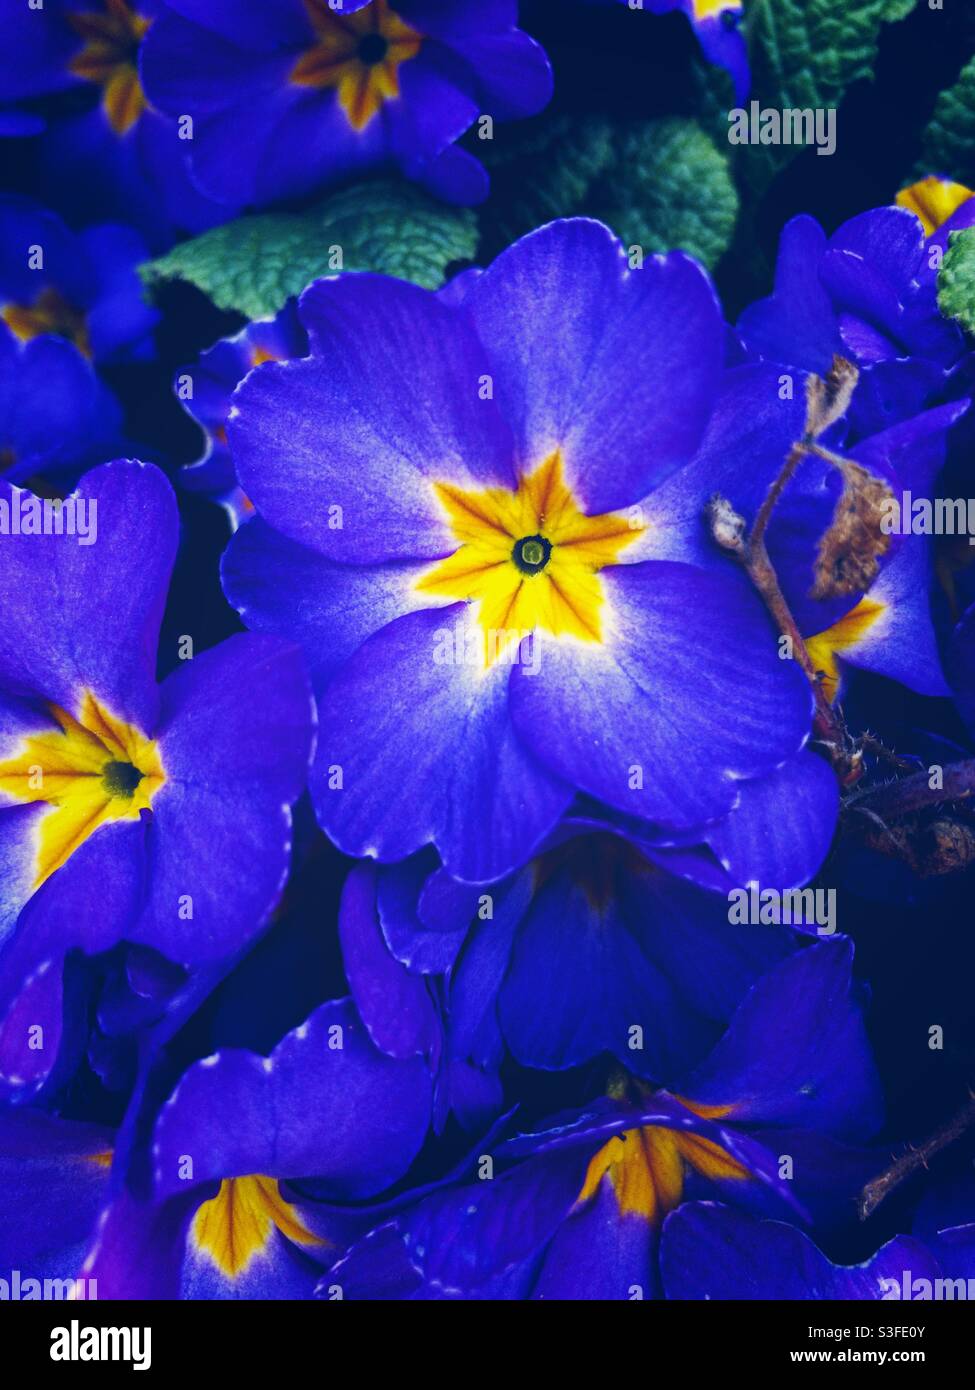 Blooming purple common primrose flowers close-up Stock Photo